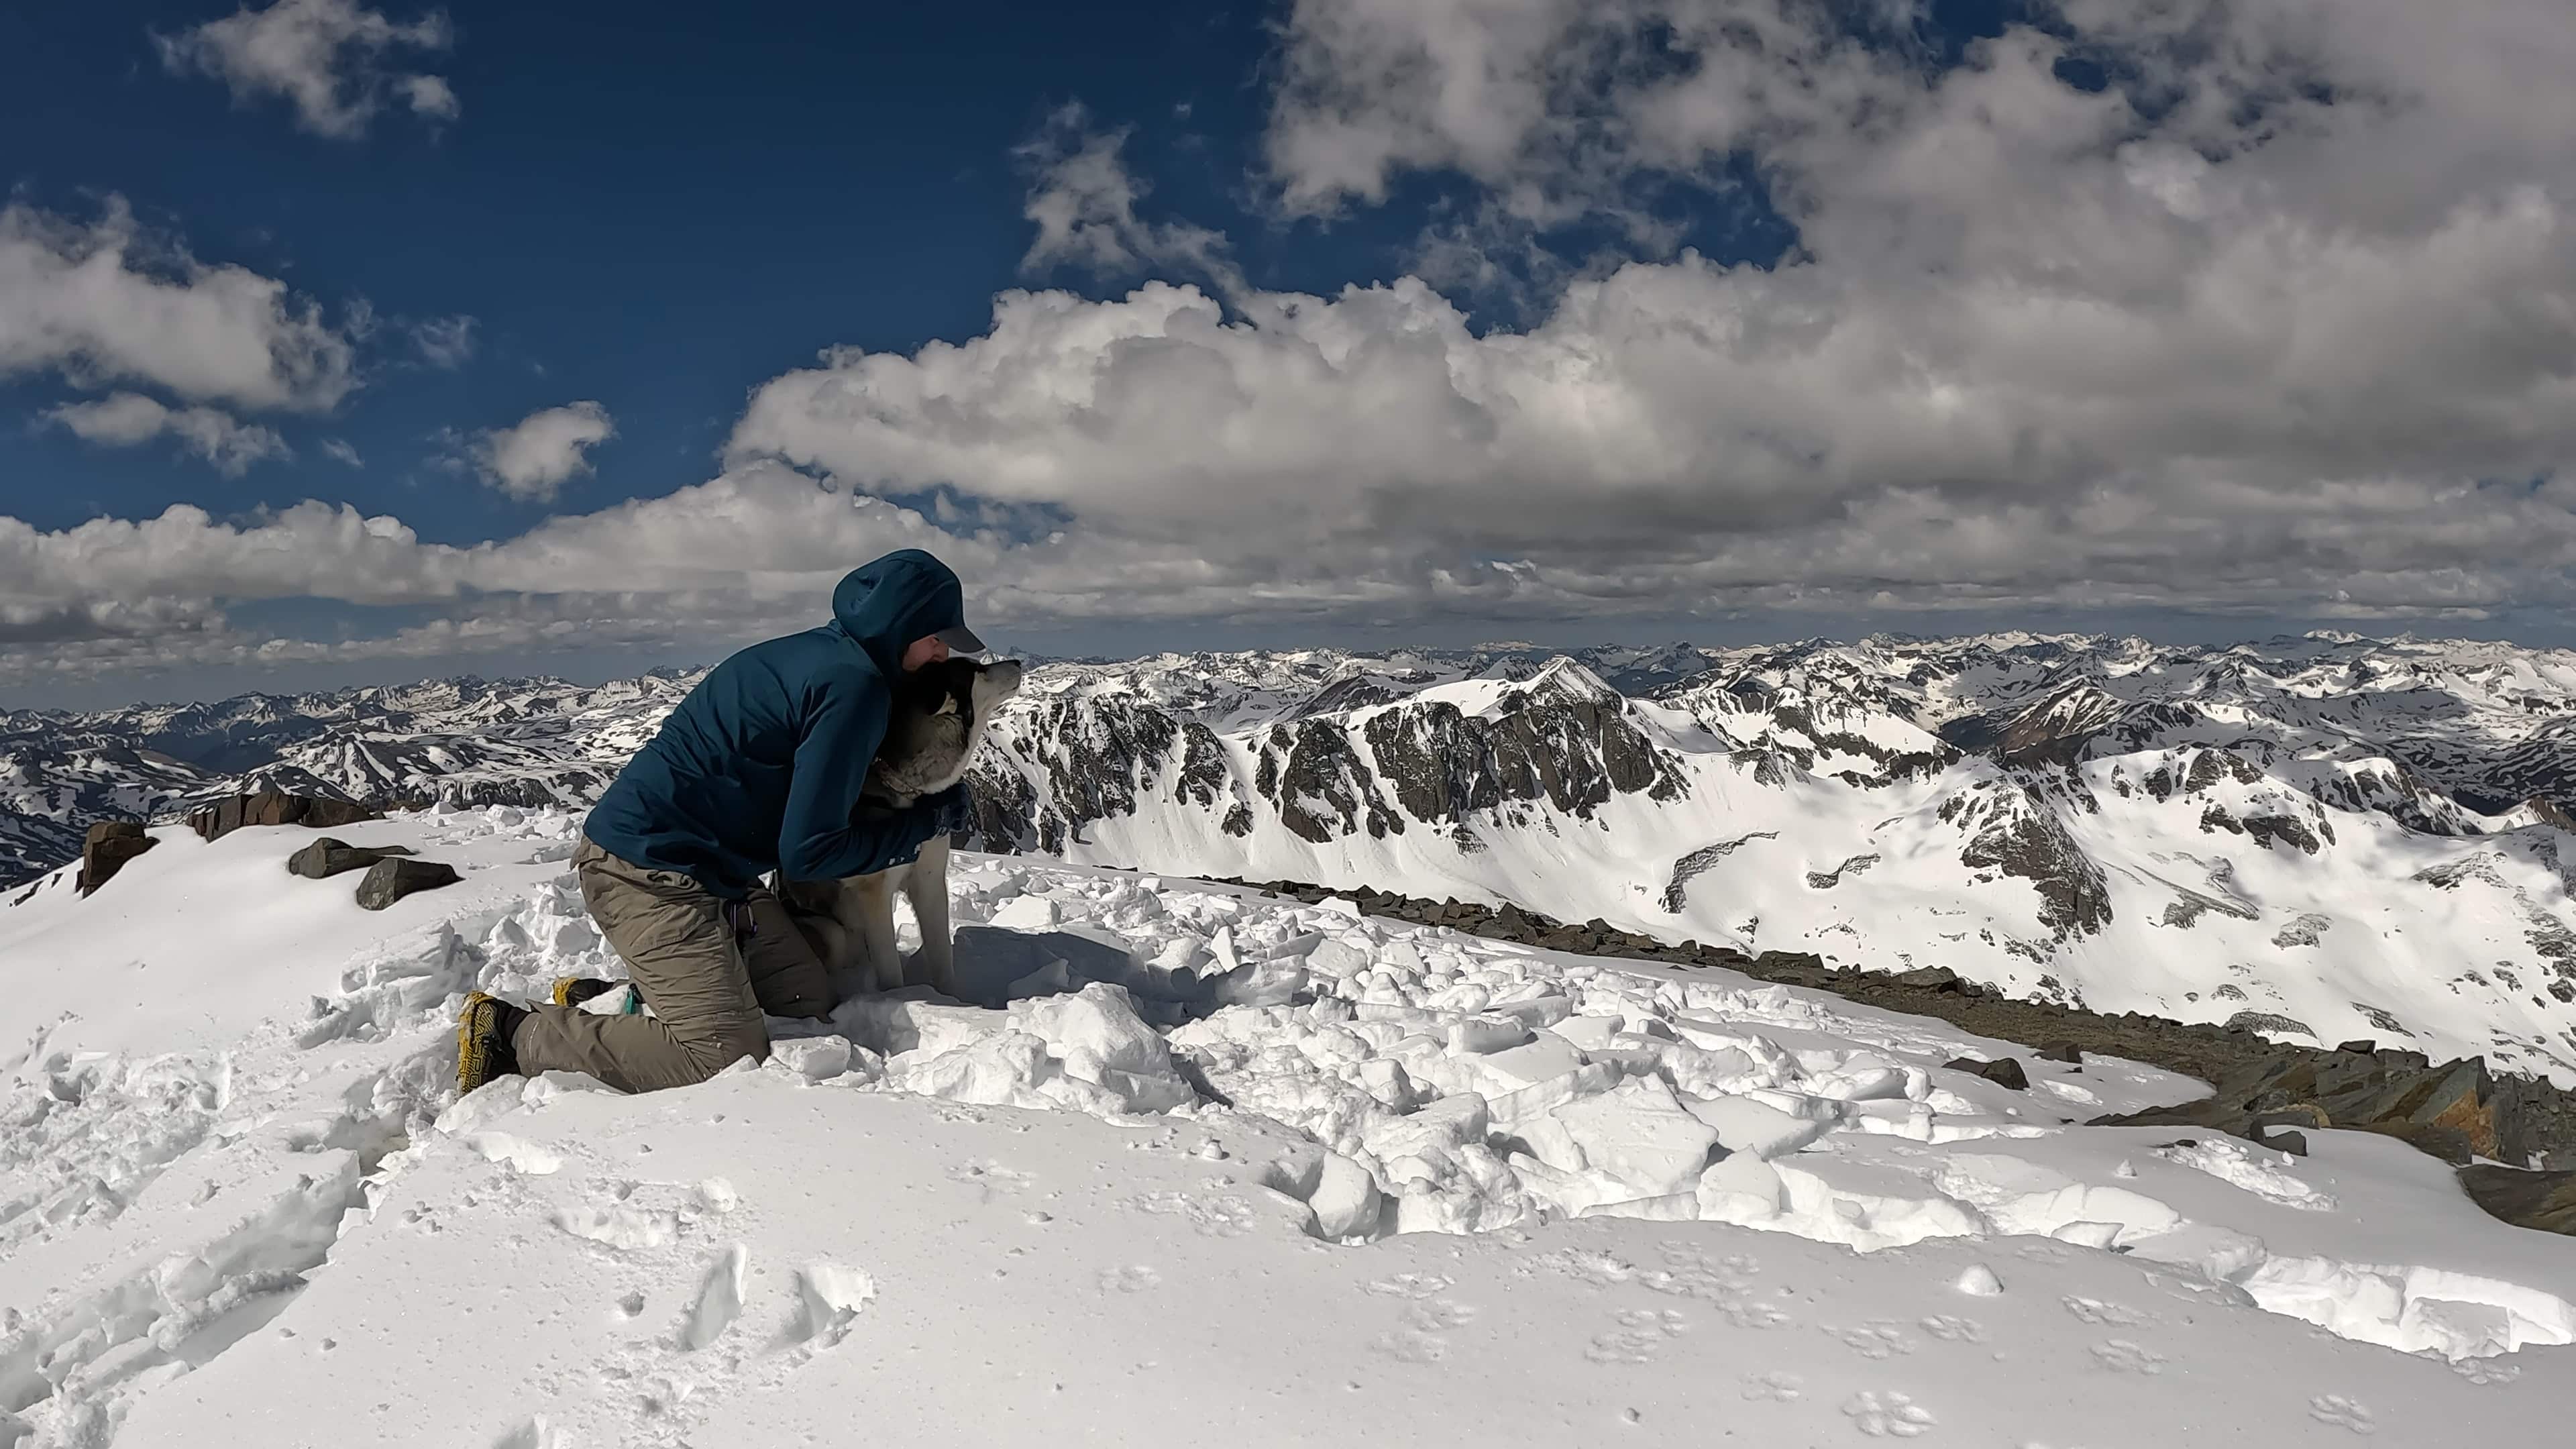 Winter hiking: Magical or miserable? - Harvard Health